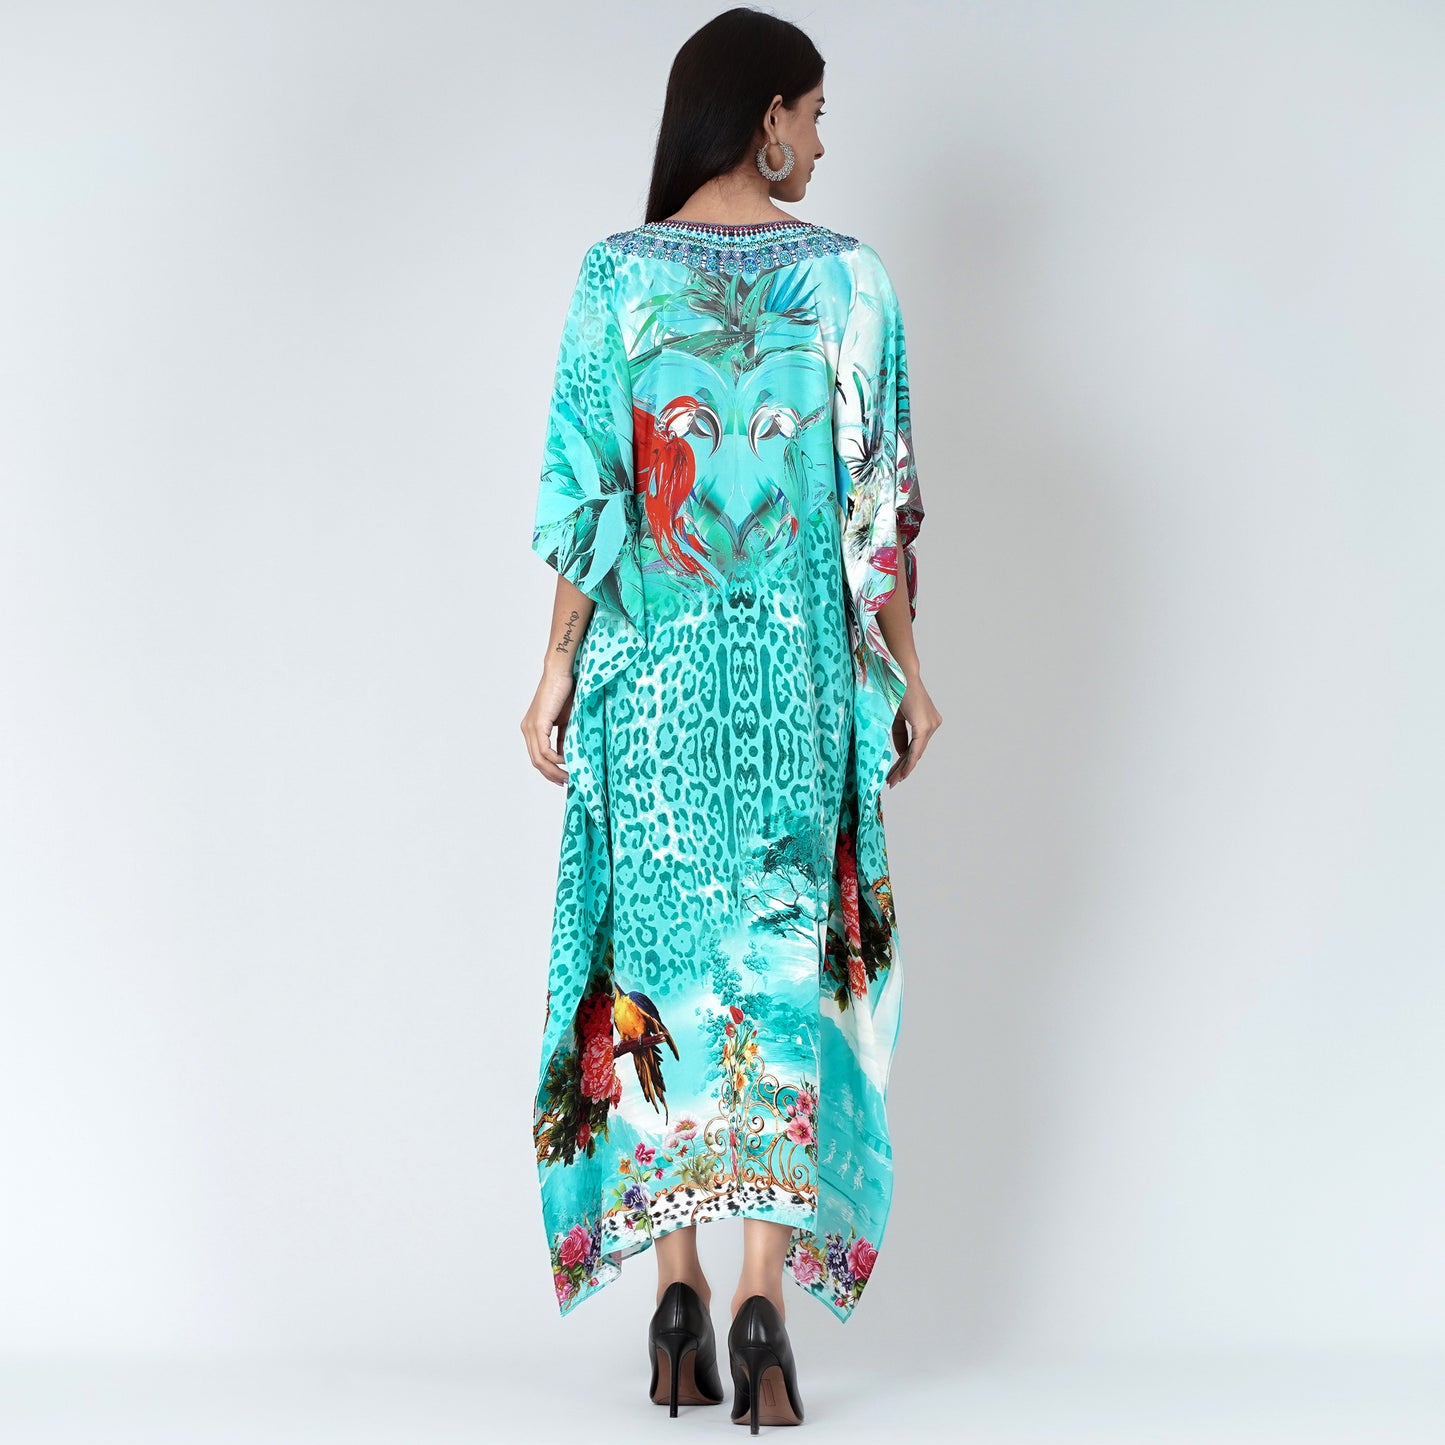 Turquoise Animal Print Embellished Silk Full Length Kaftan